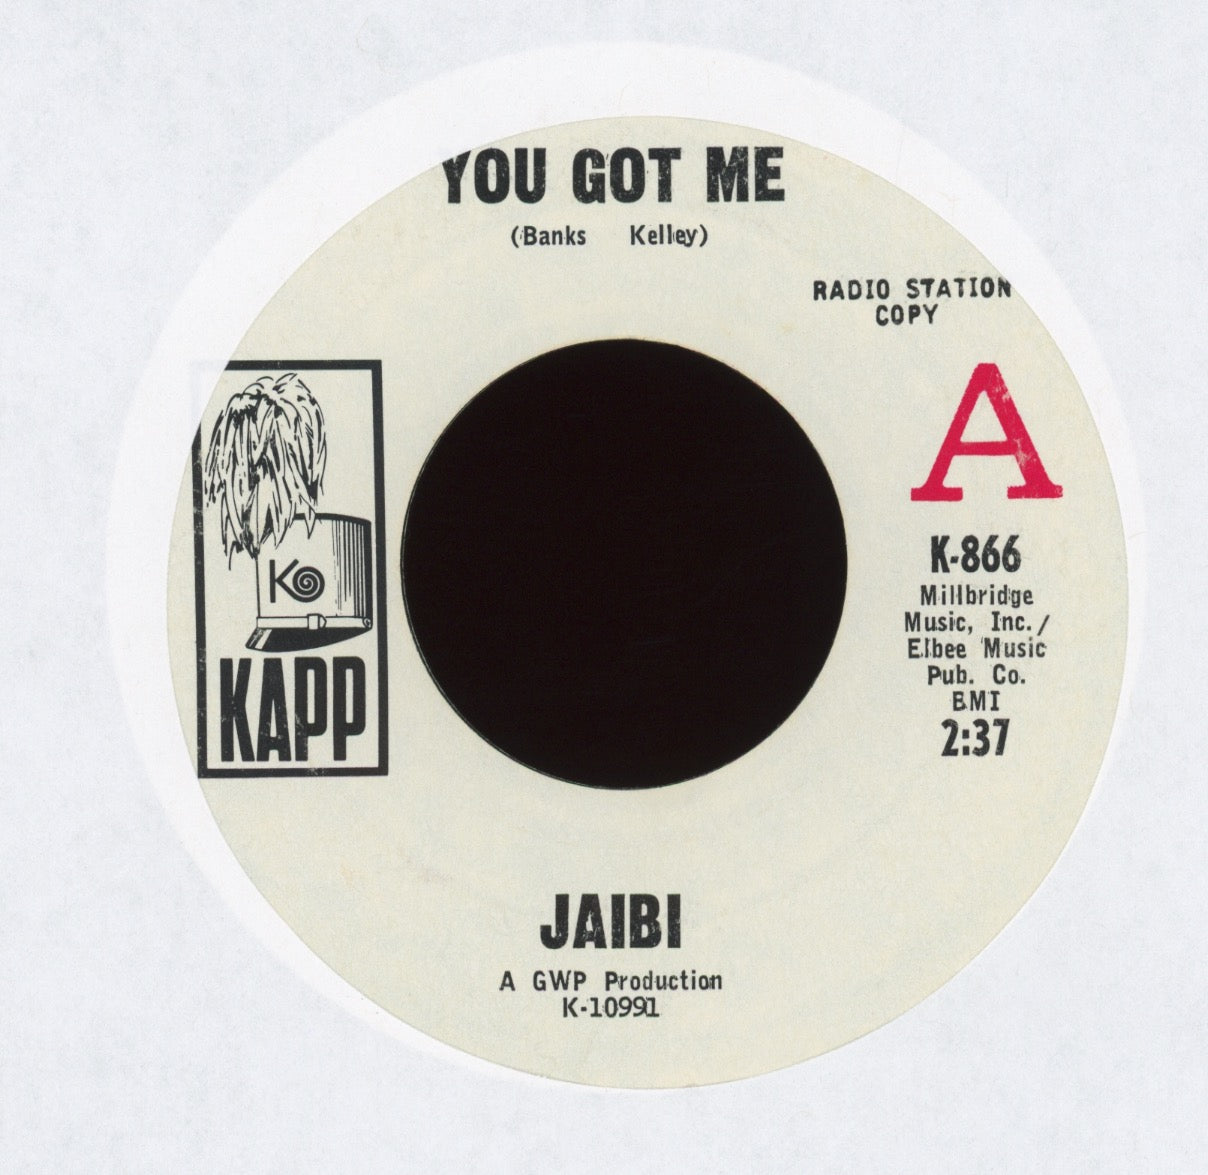 Jaibi - What Good Am I on Kapp Promo Crossover Soul 45